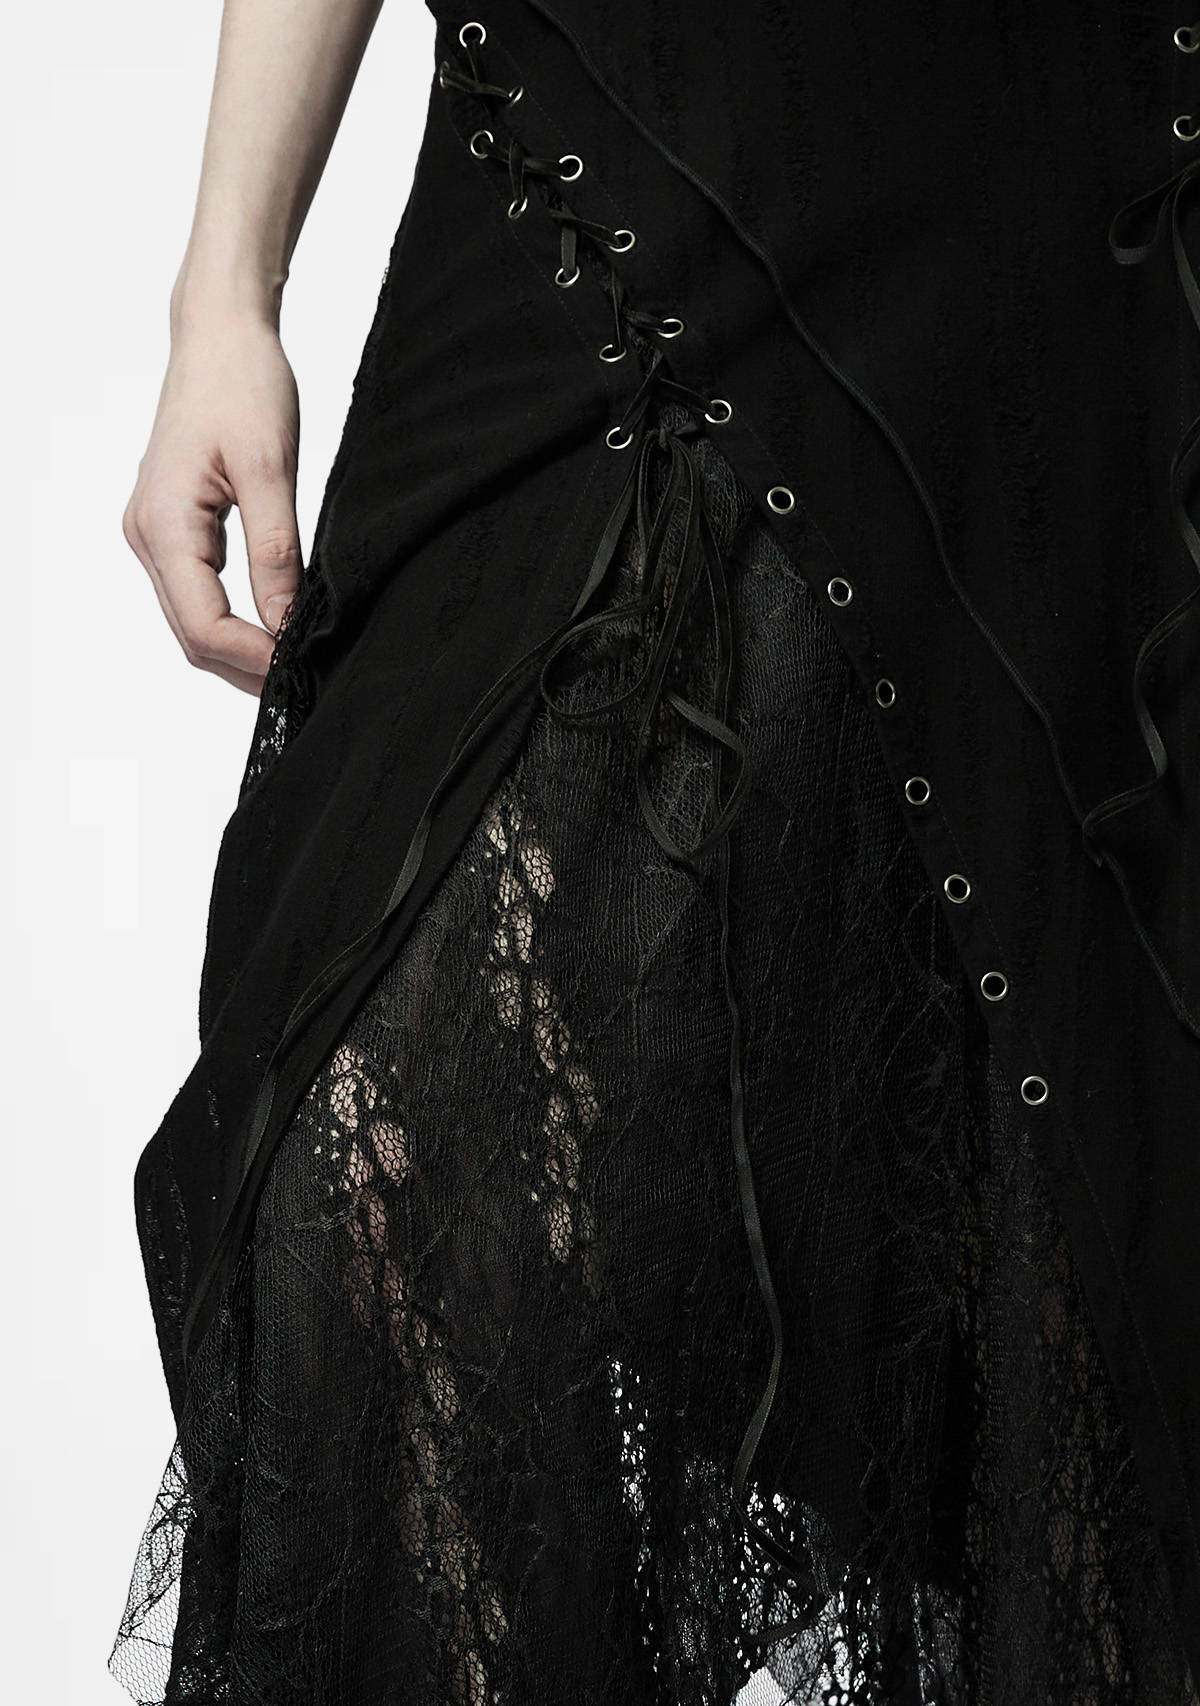 Goth Decadent Dress